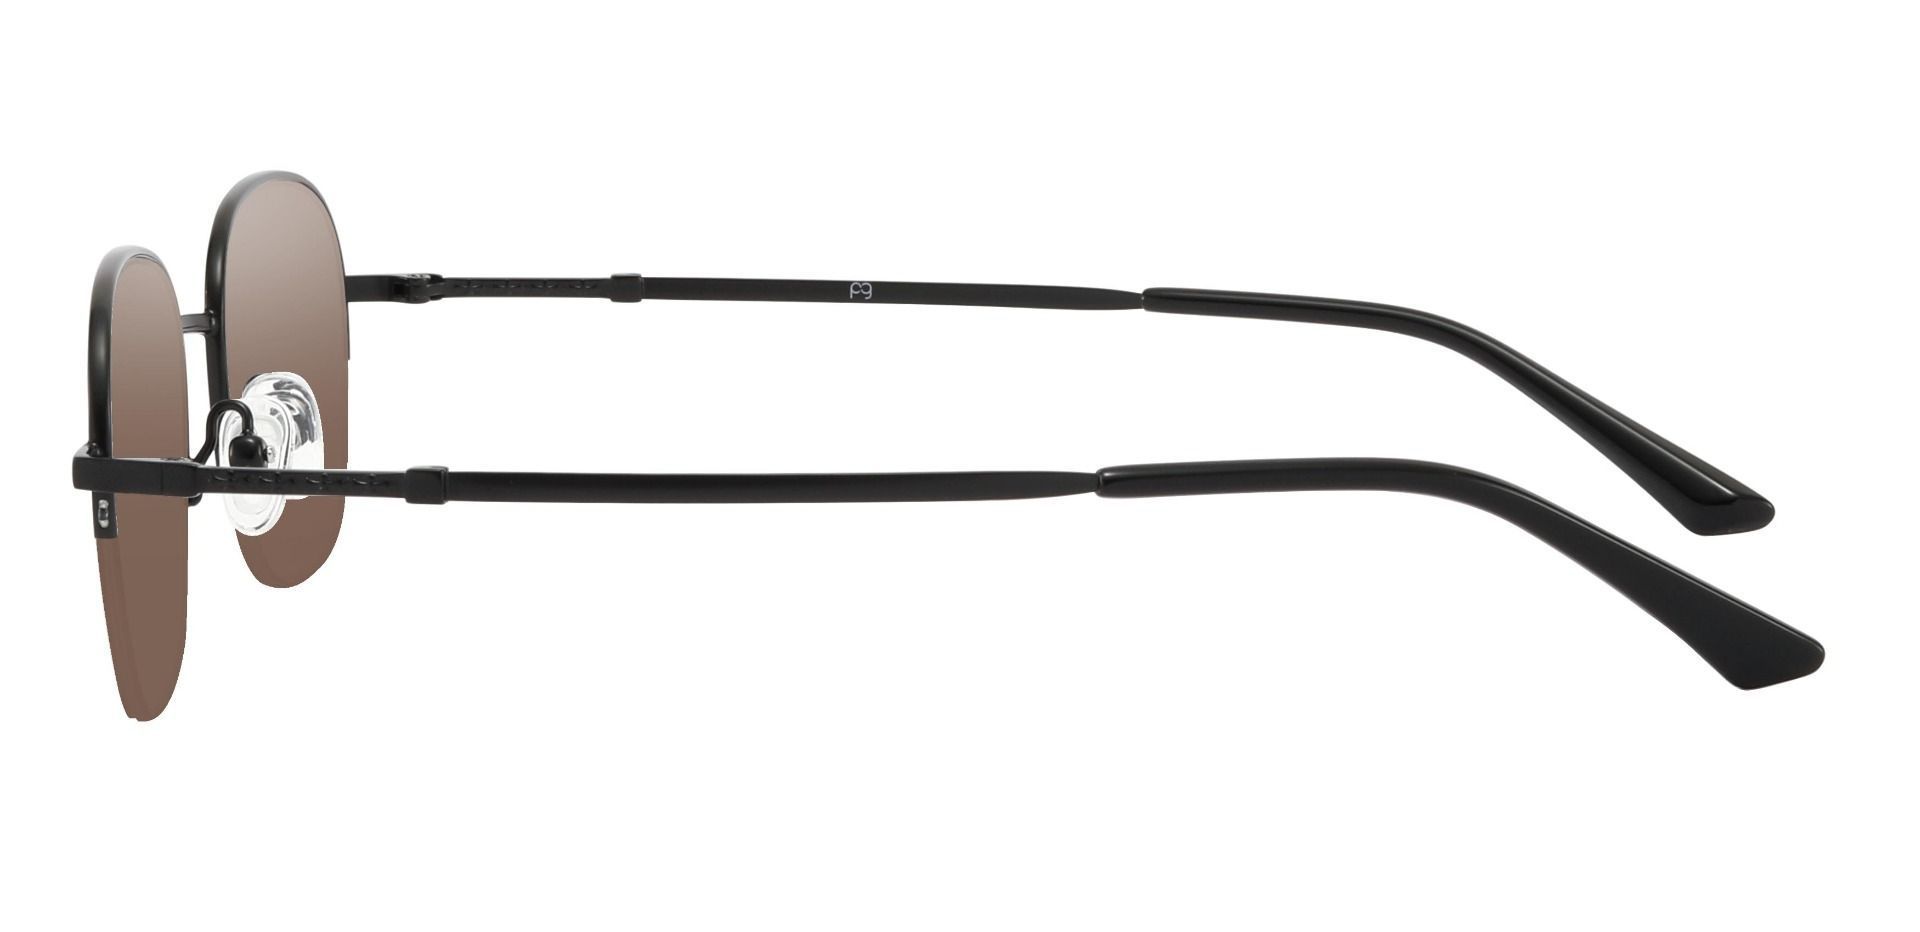 Rochester Oval Prescription Sunglasses - Black Frame With Brown Lenses